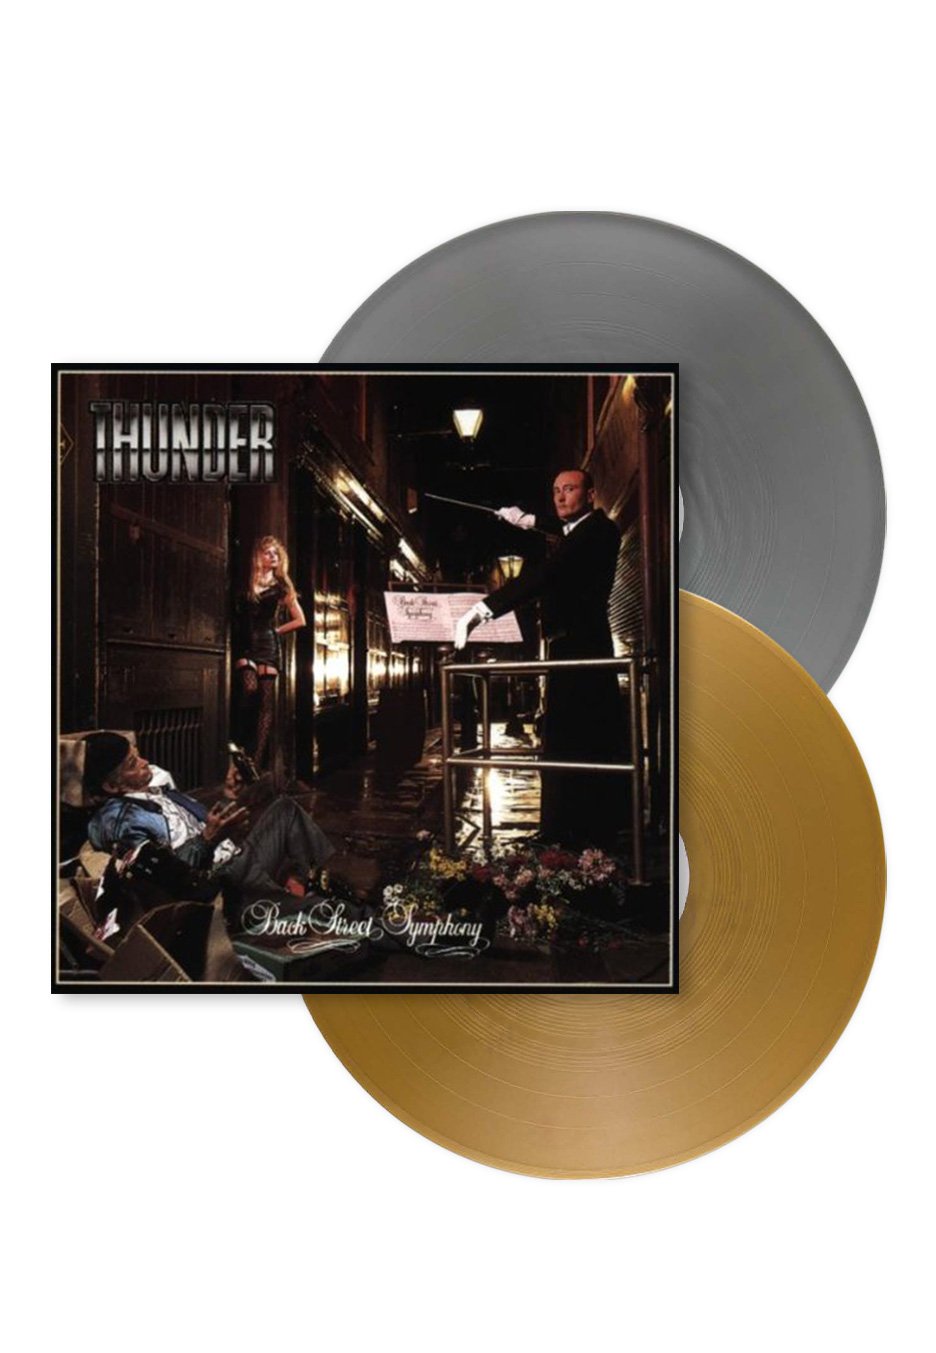 Thunder - Backstreet Symphony (Expanded Version) Ltd. Gold + Silver - Colored 2 Vinyl